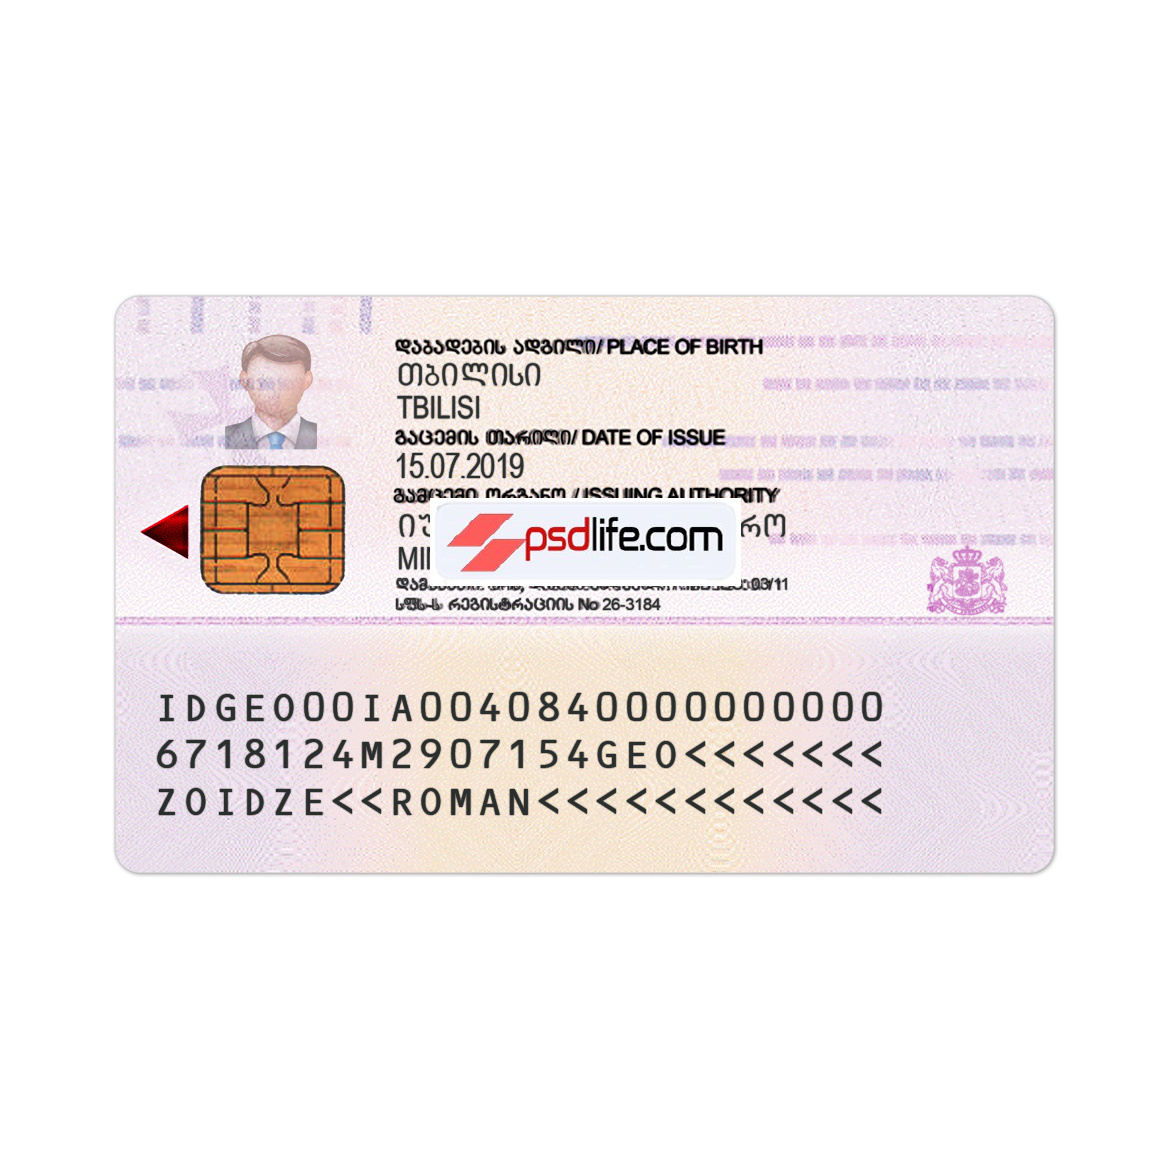 Georgia ID card psd template full editabale | Georgia id card Template photoshop use for | ID Card Number Georgia | საქართველოს ID ბარათი ყალბი Psd შაბლონი რედაქტირებადი უფასო ჩამოტვირთვა